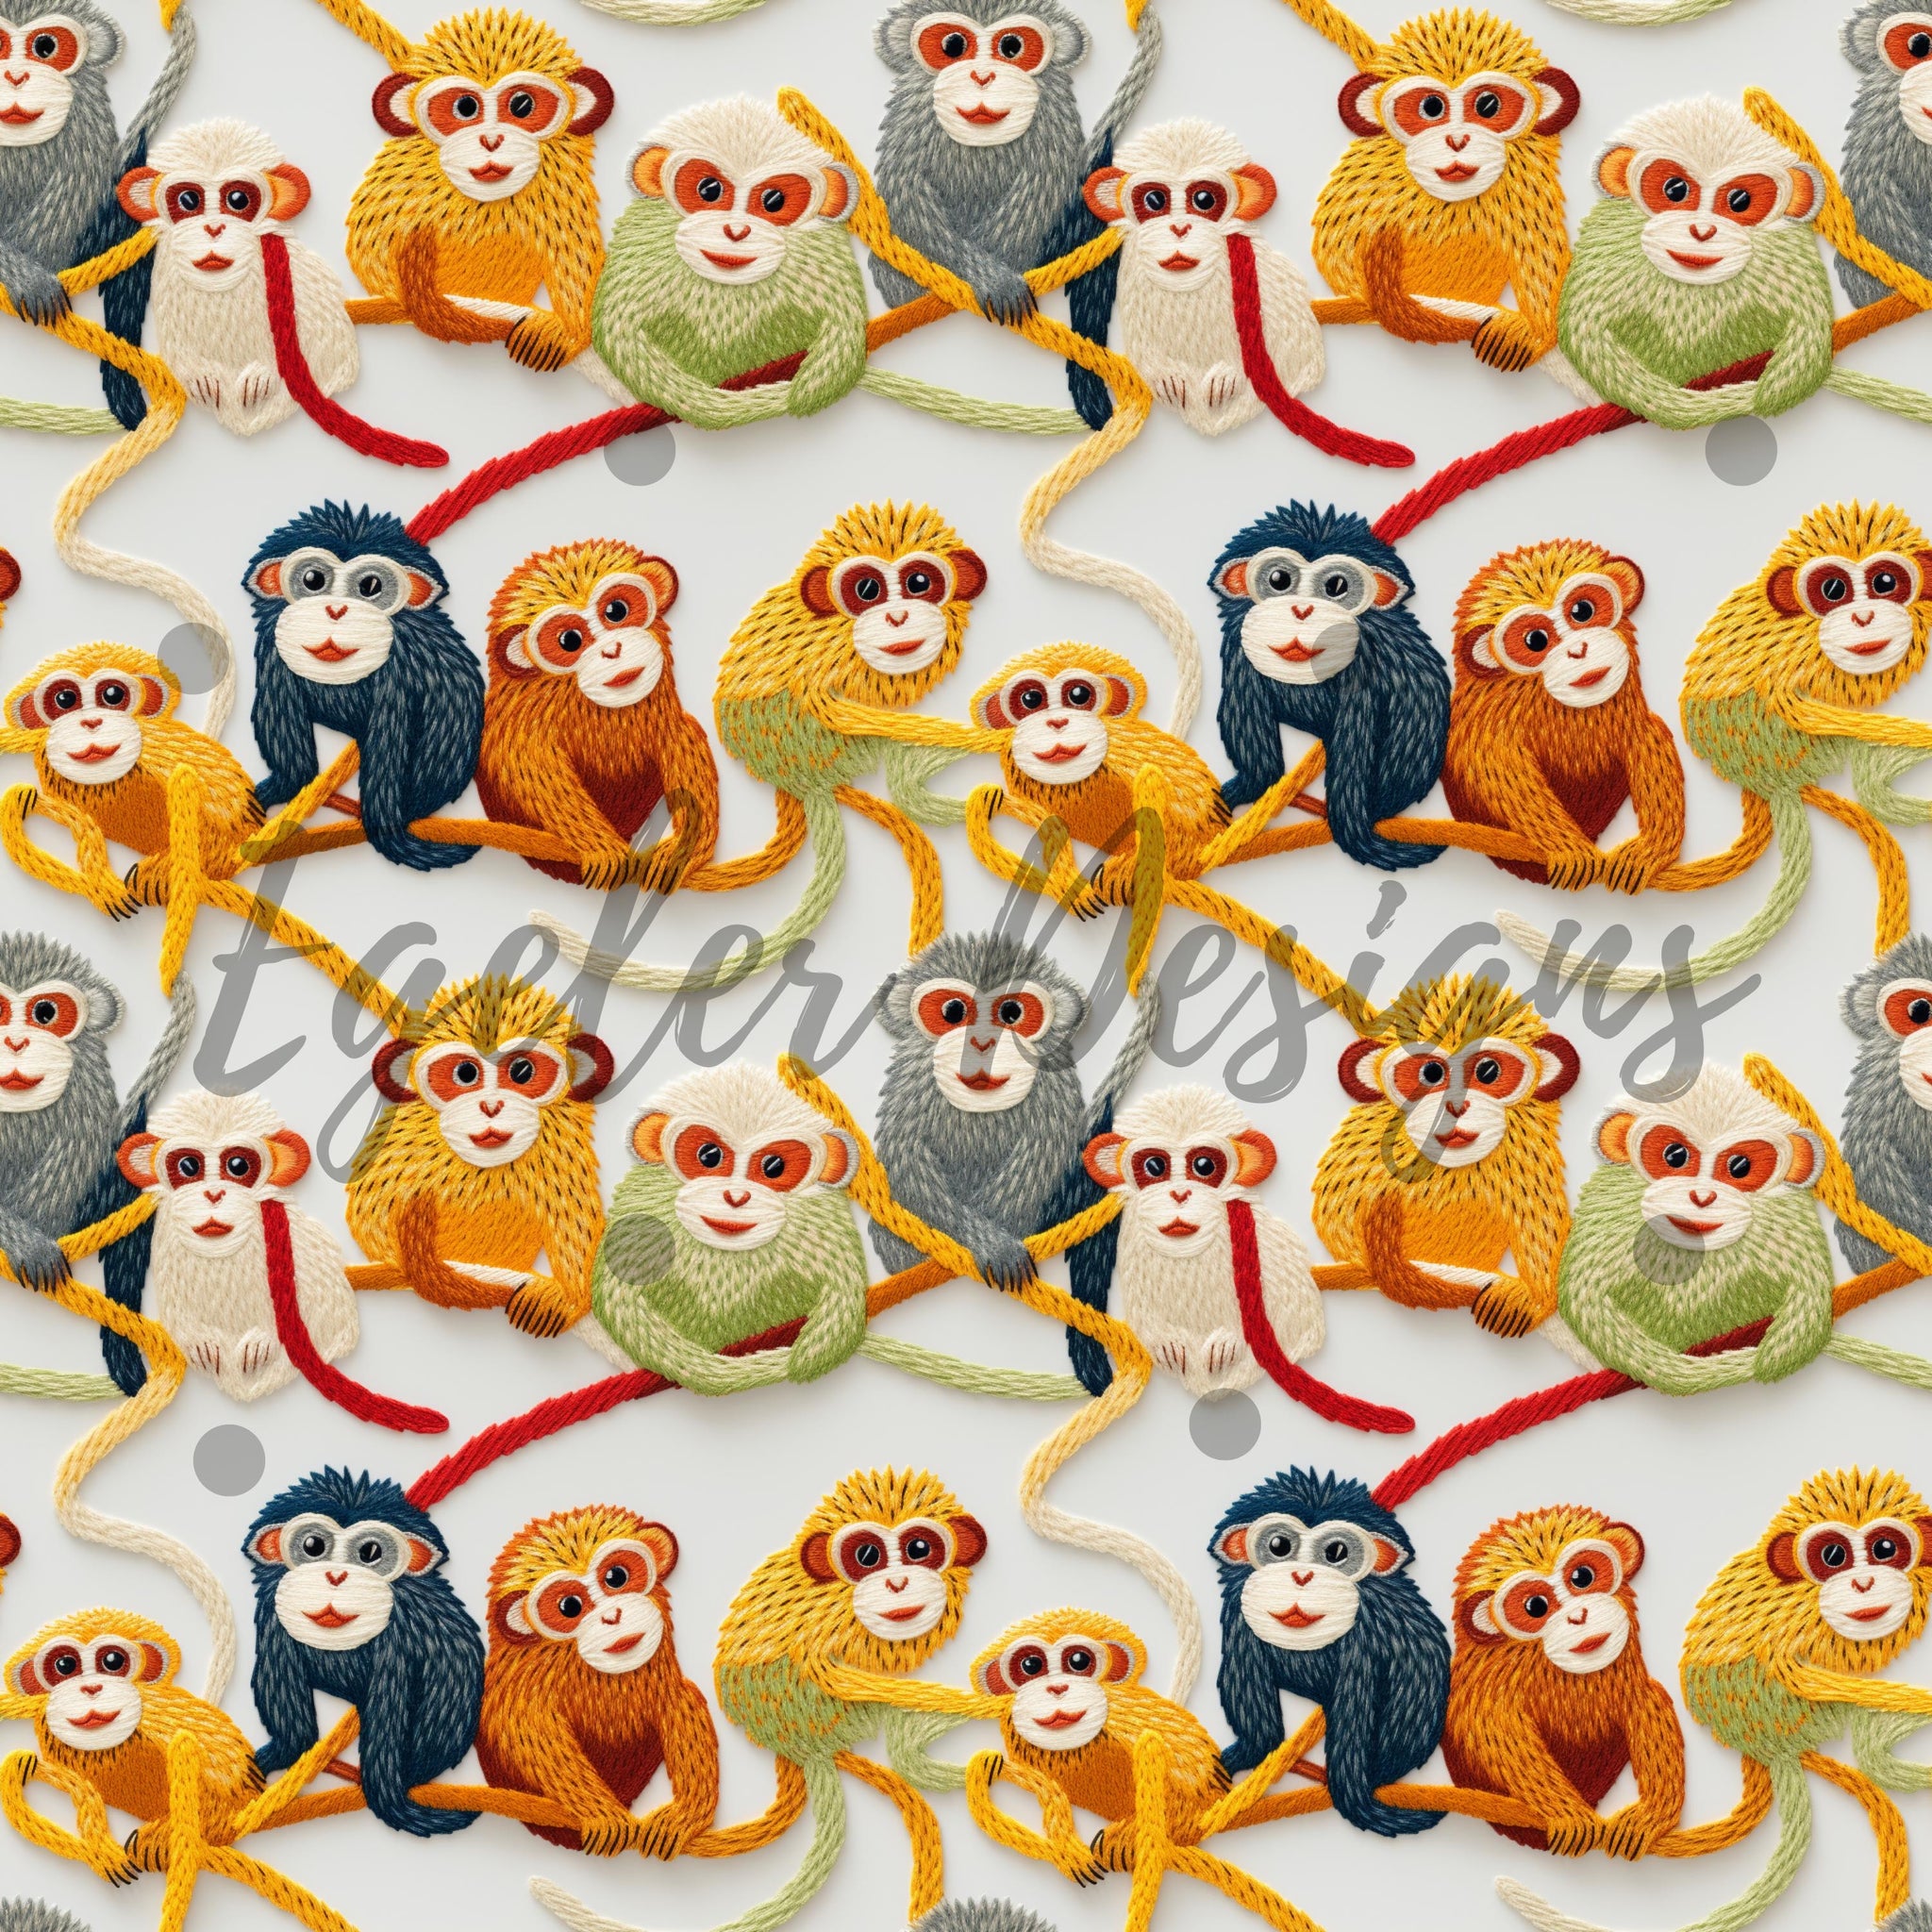 Knit Monkeys (LIMITED 30)